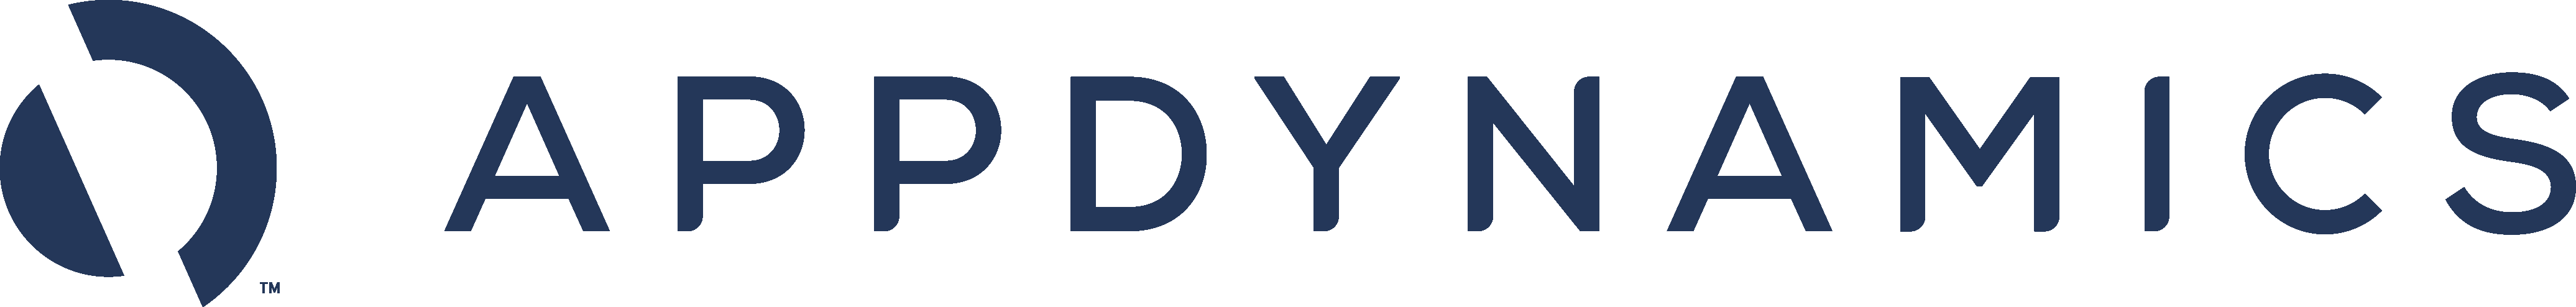 AppDynamics-Logo